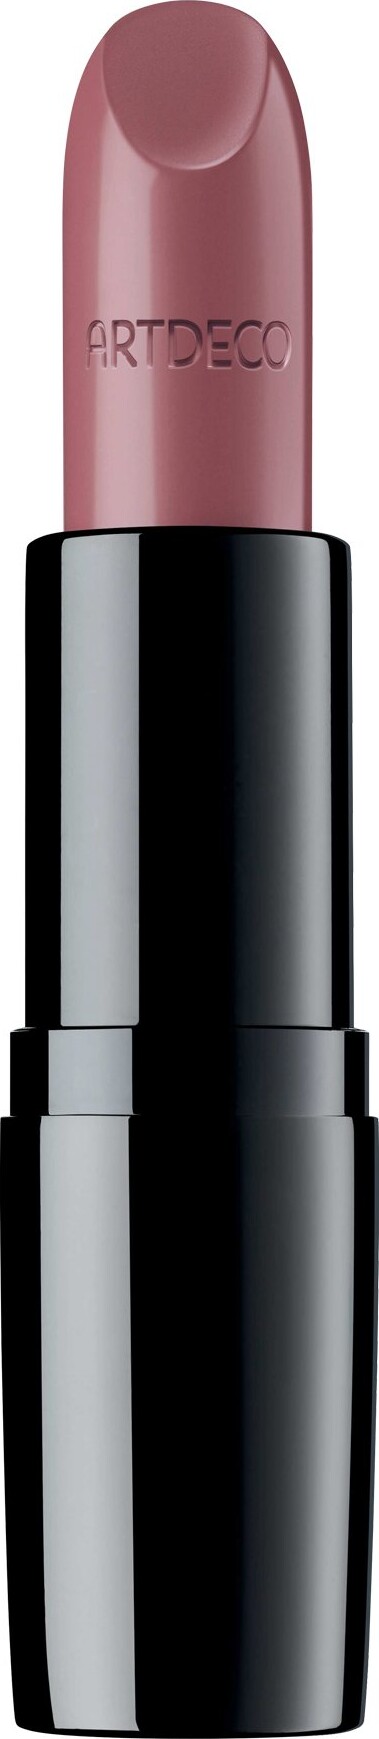 Se Artdeco - Perfect Color Lipstick - 820 Creamy Rosewood hos Gucca.dk